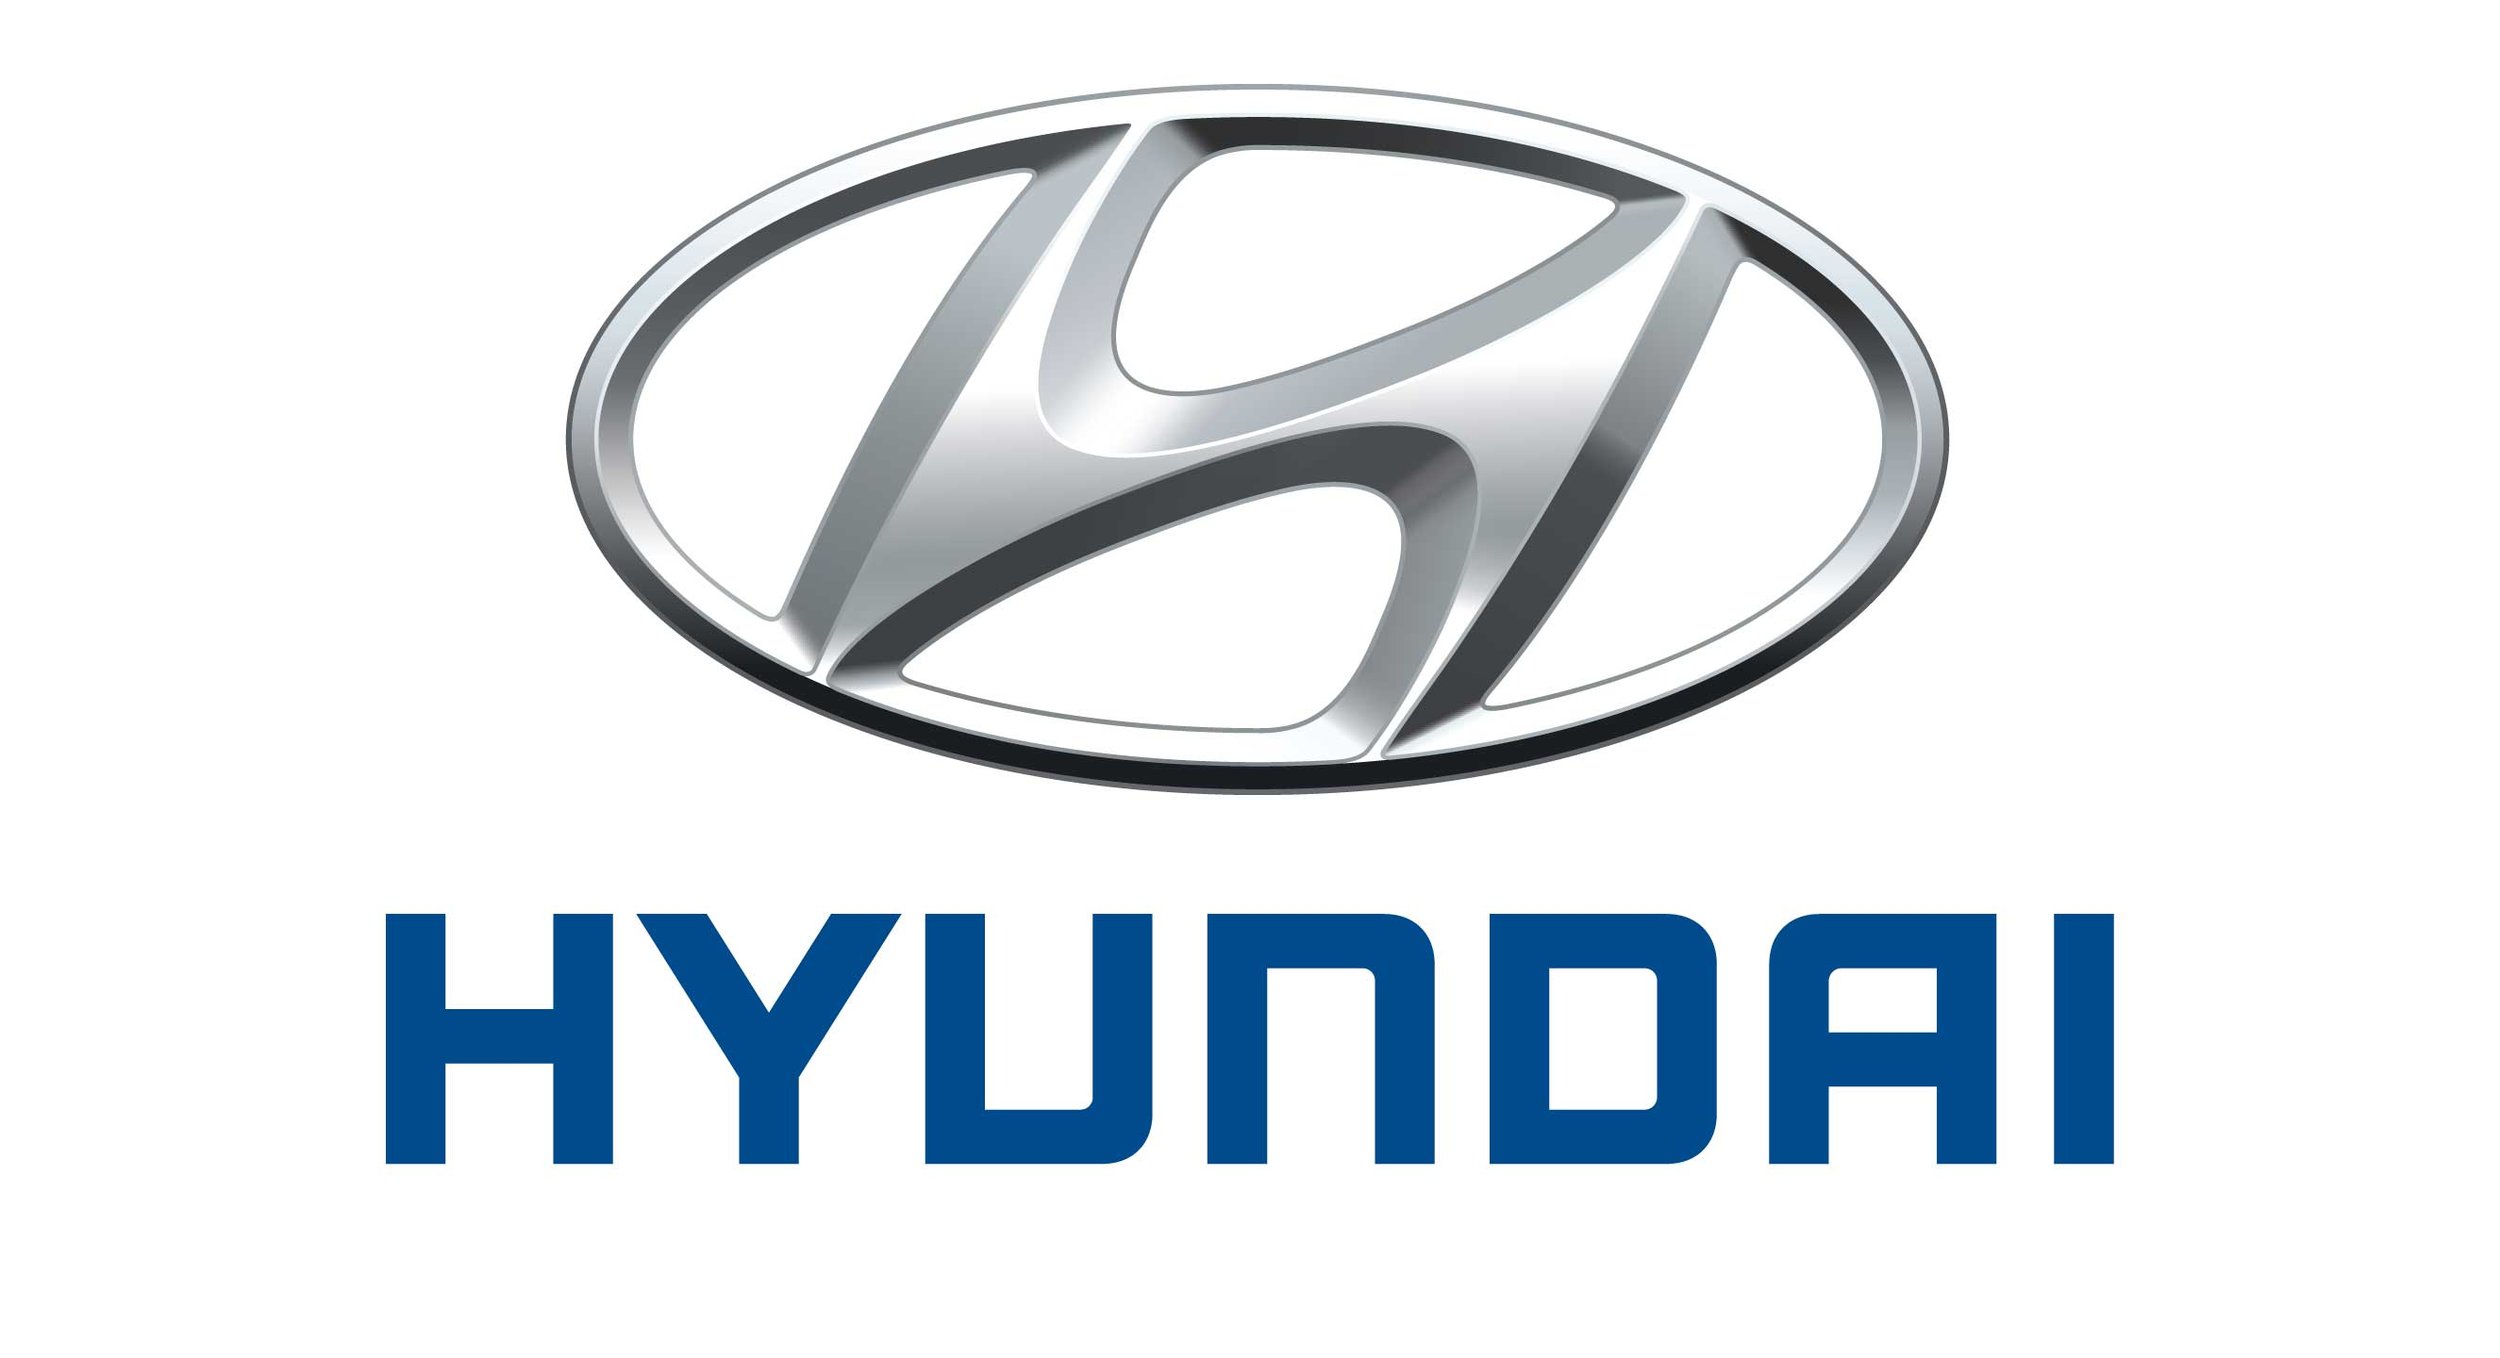 Hyundai-logo-silver-2560x1440.jpg